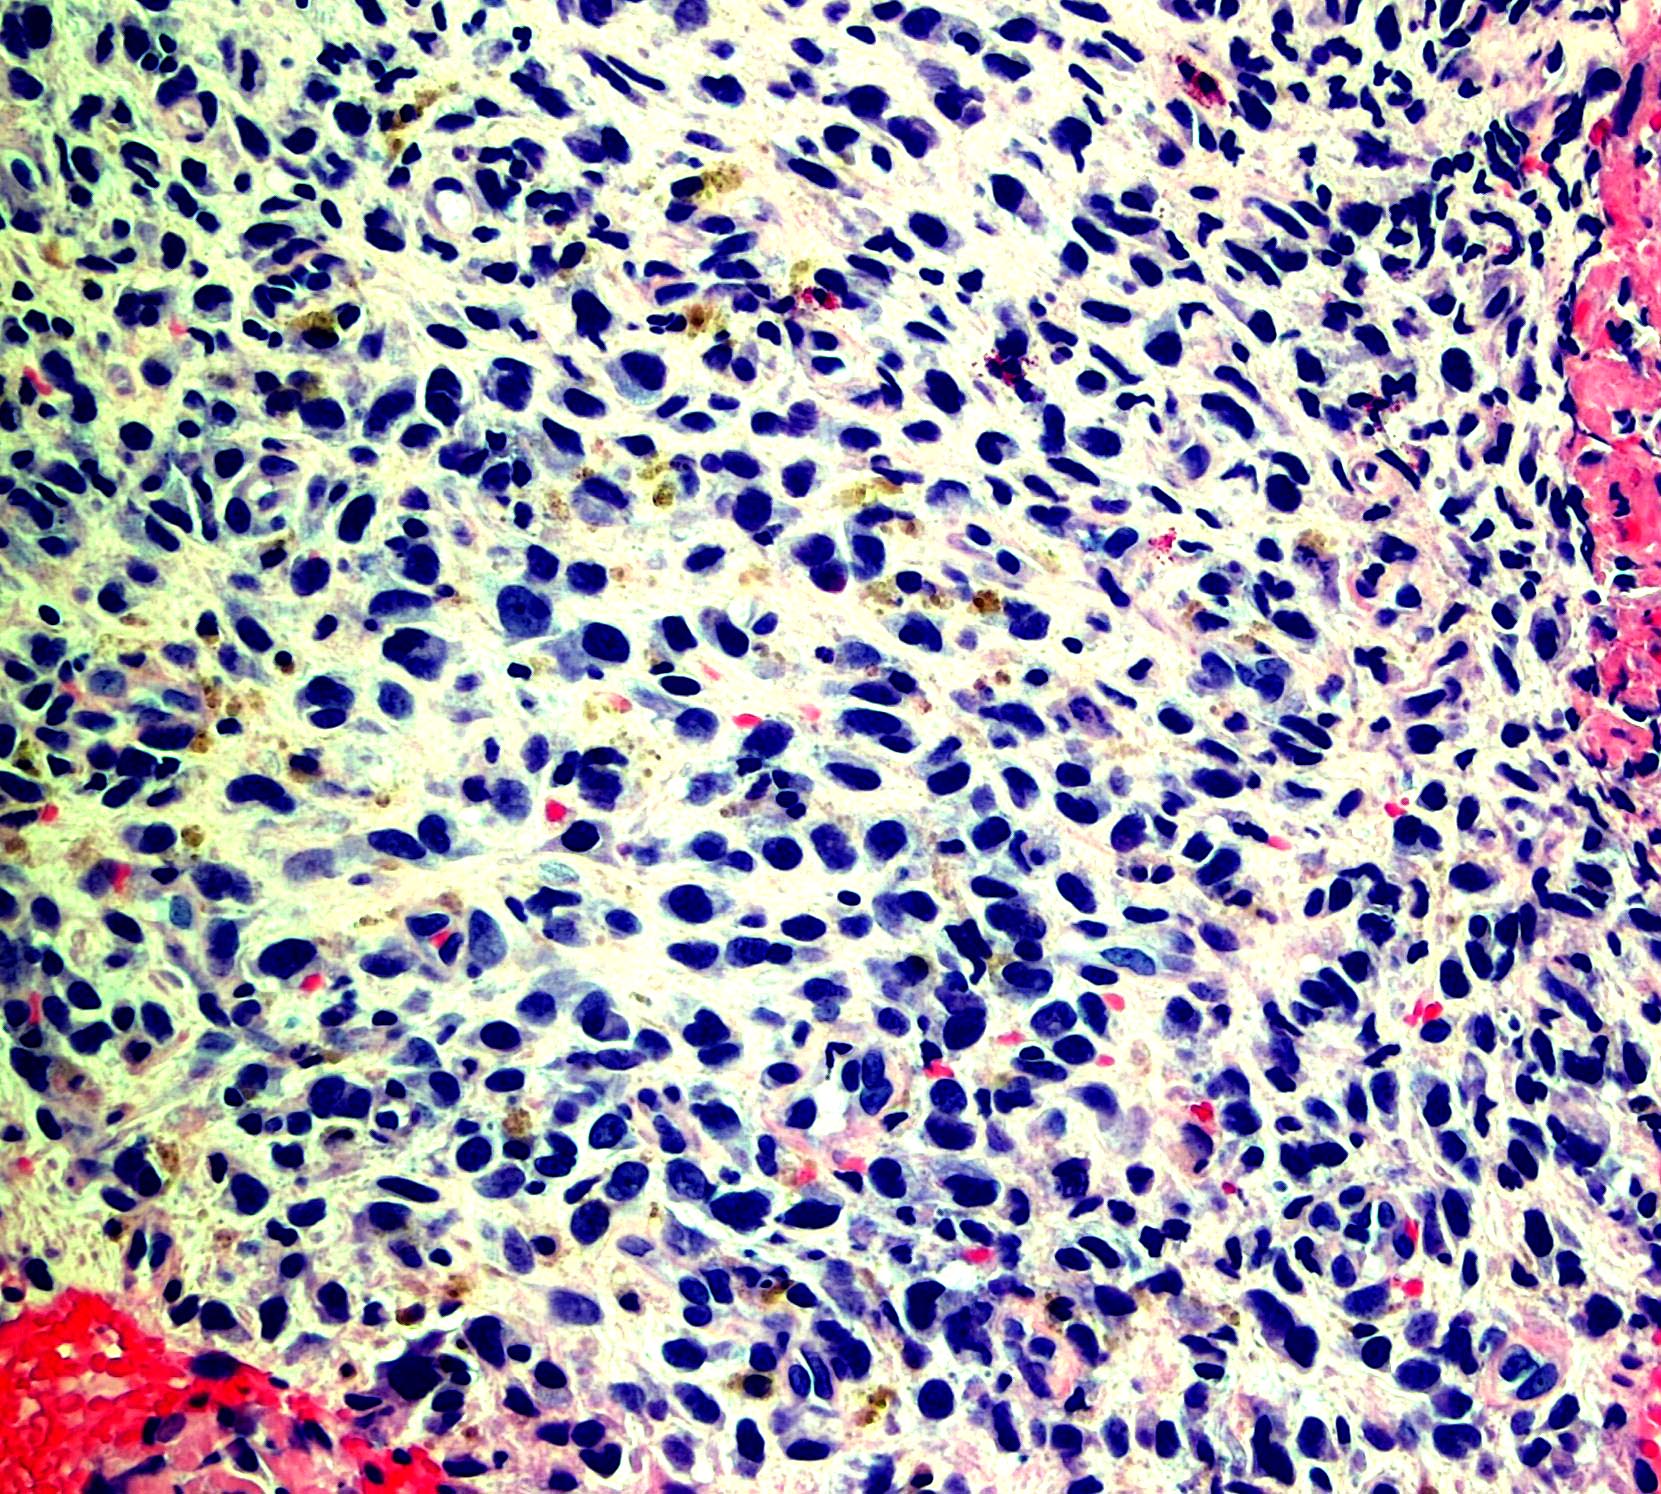 Brain diffuse large B cell lymphoma